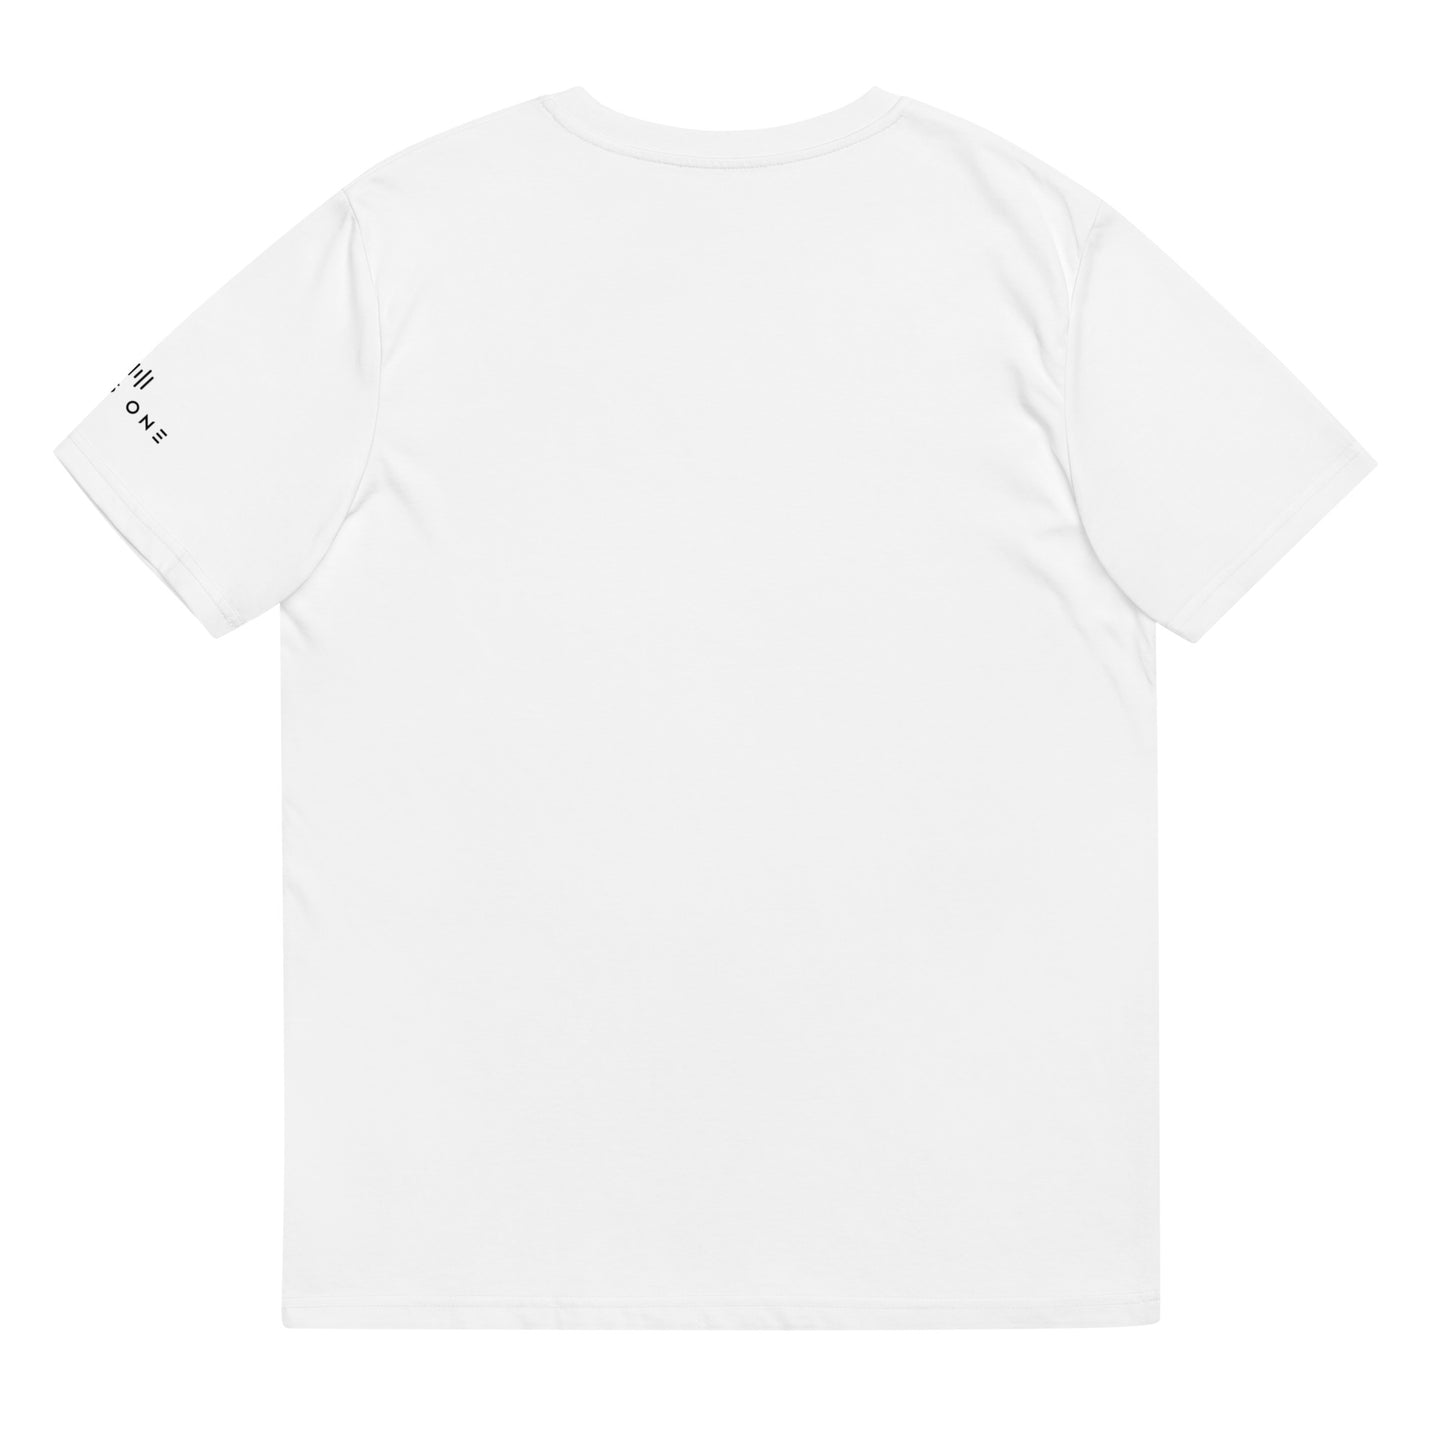 Hustle (v1) Unisex organic cotton t-shirt (Black Text)